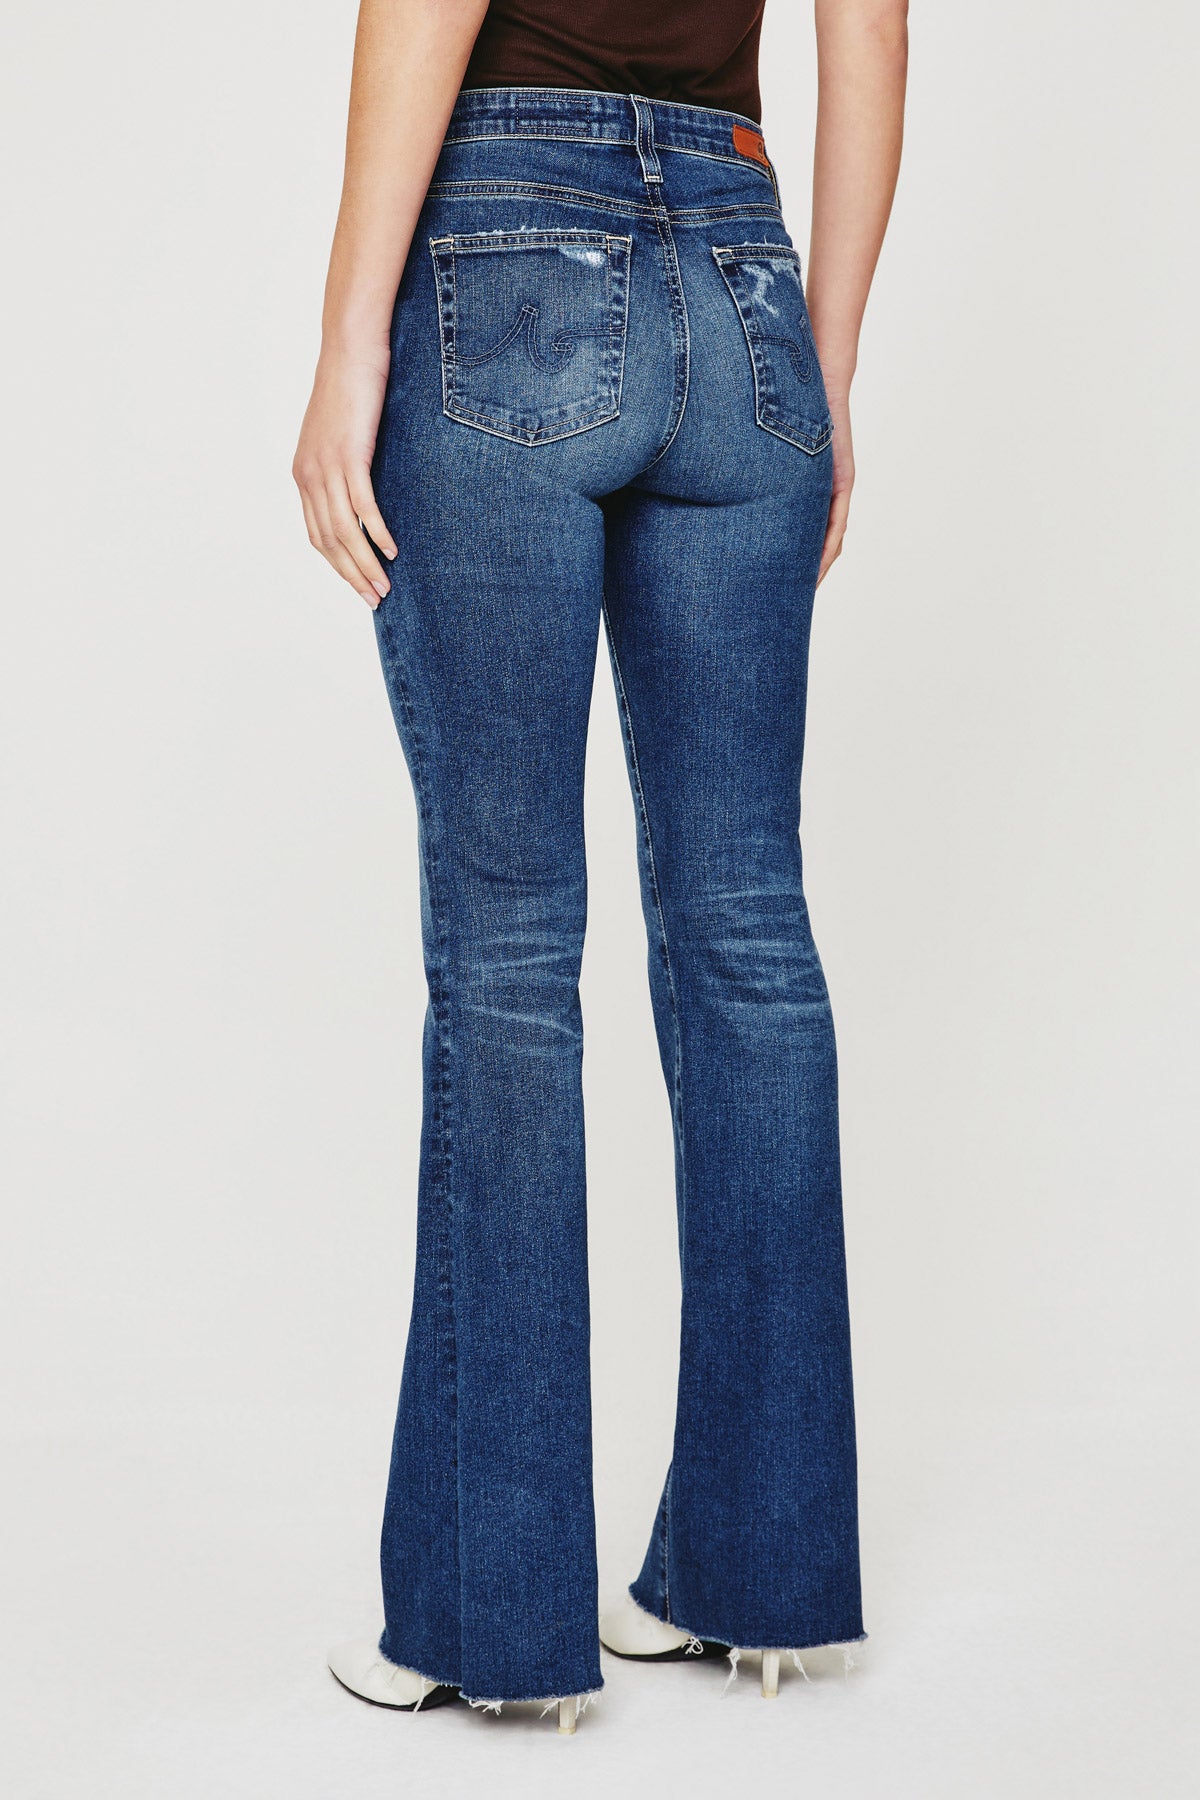 Farrah Boot by AG Jeans